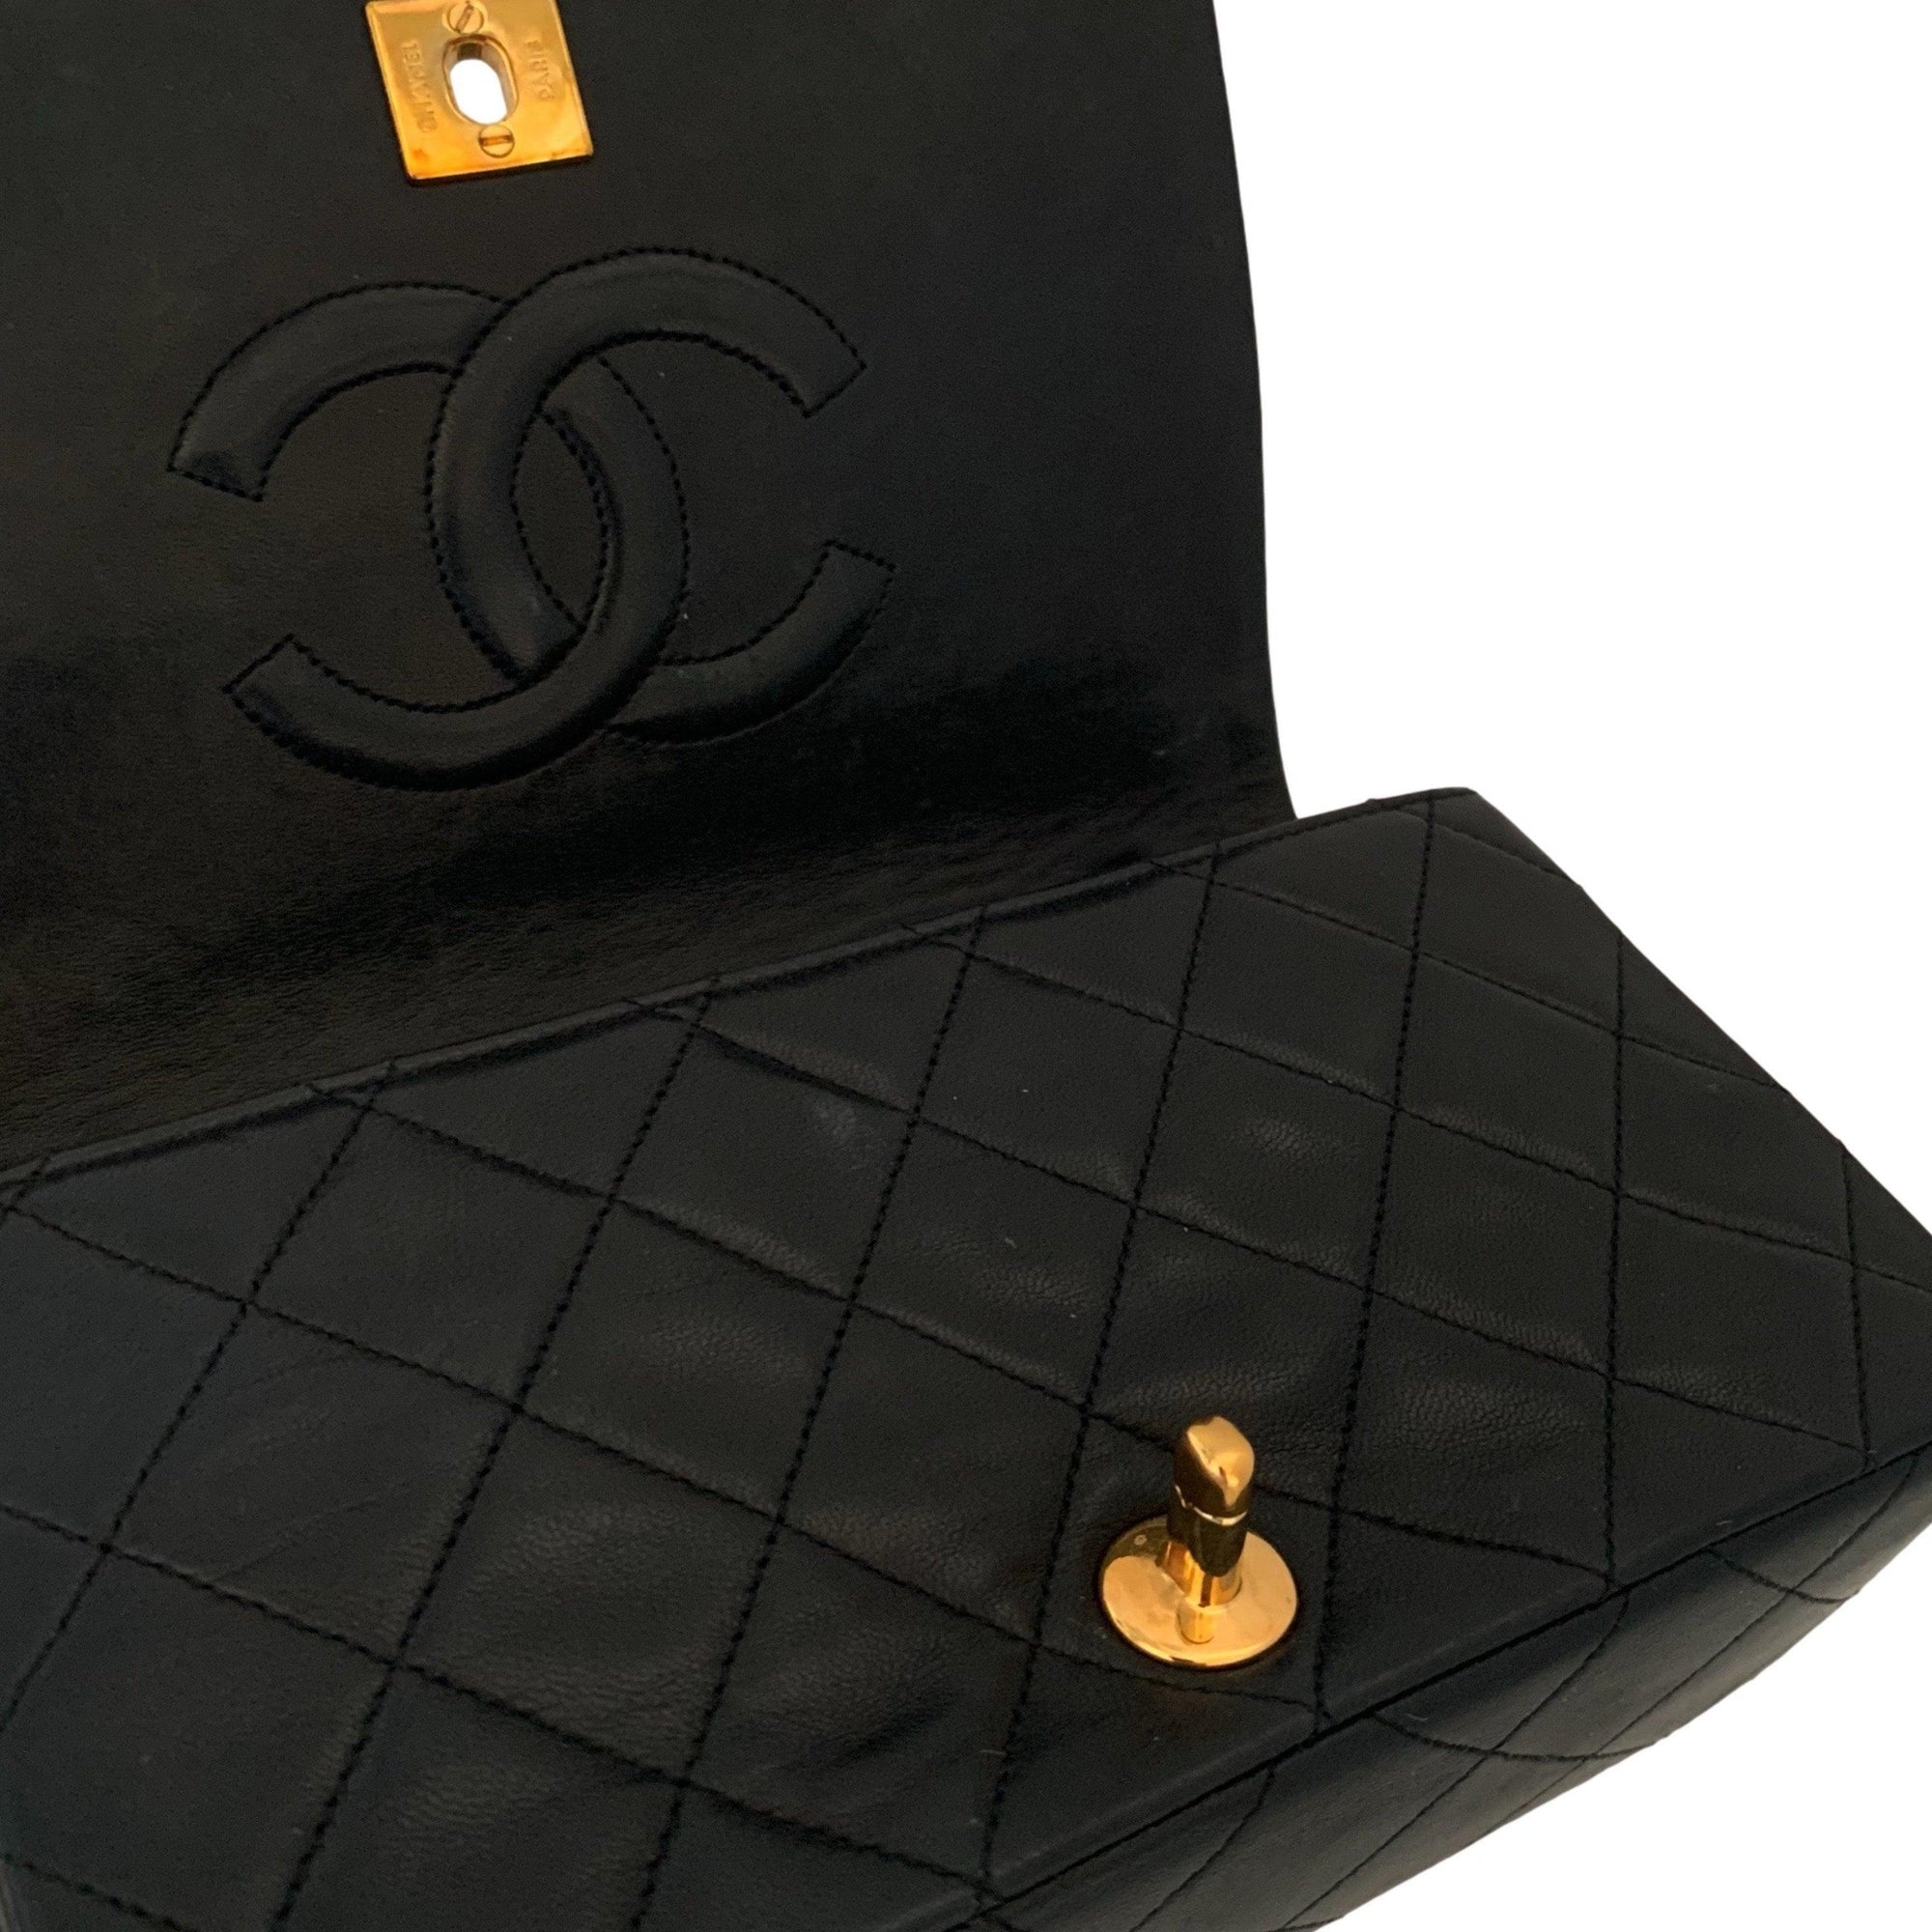 Chanel Black Lambskin Flap Bag - Handbags